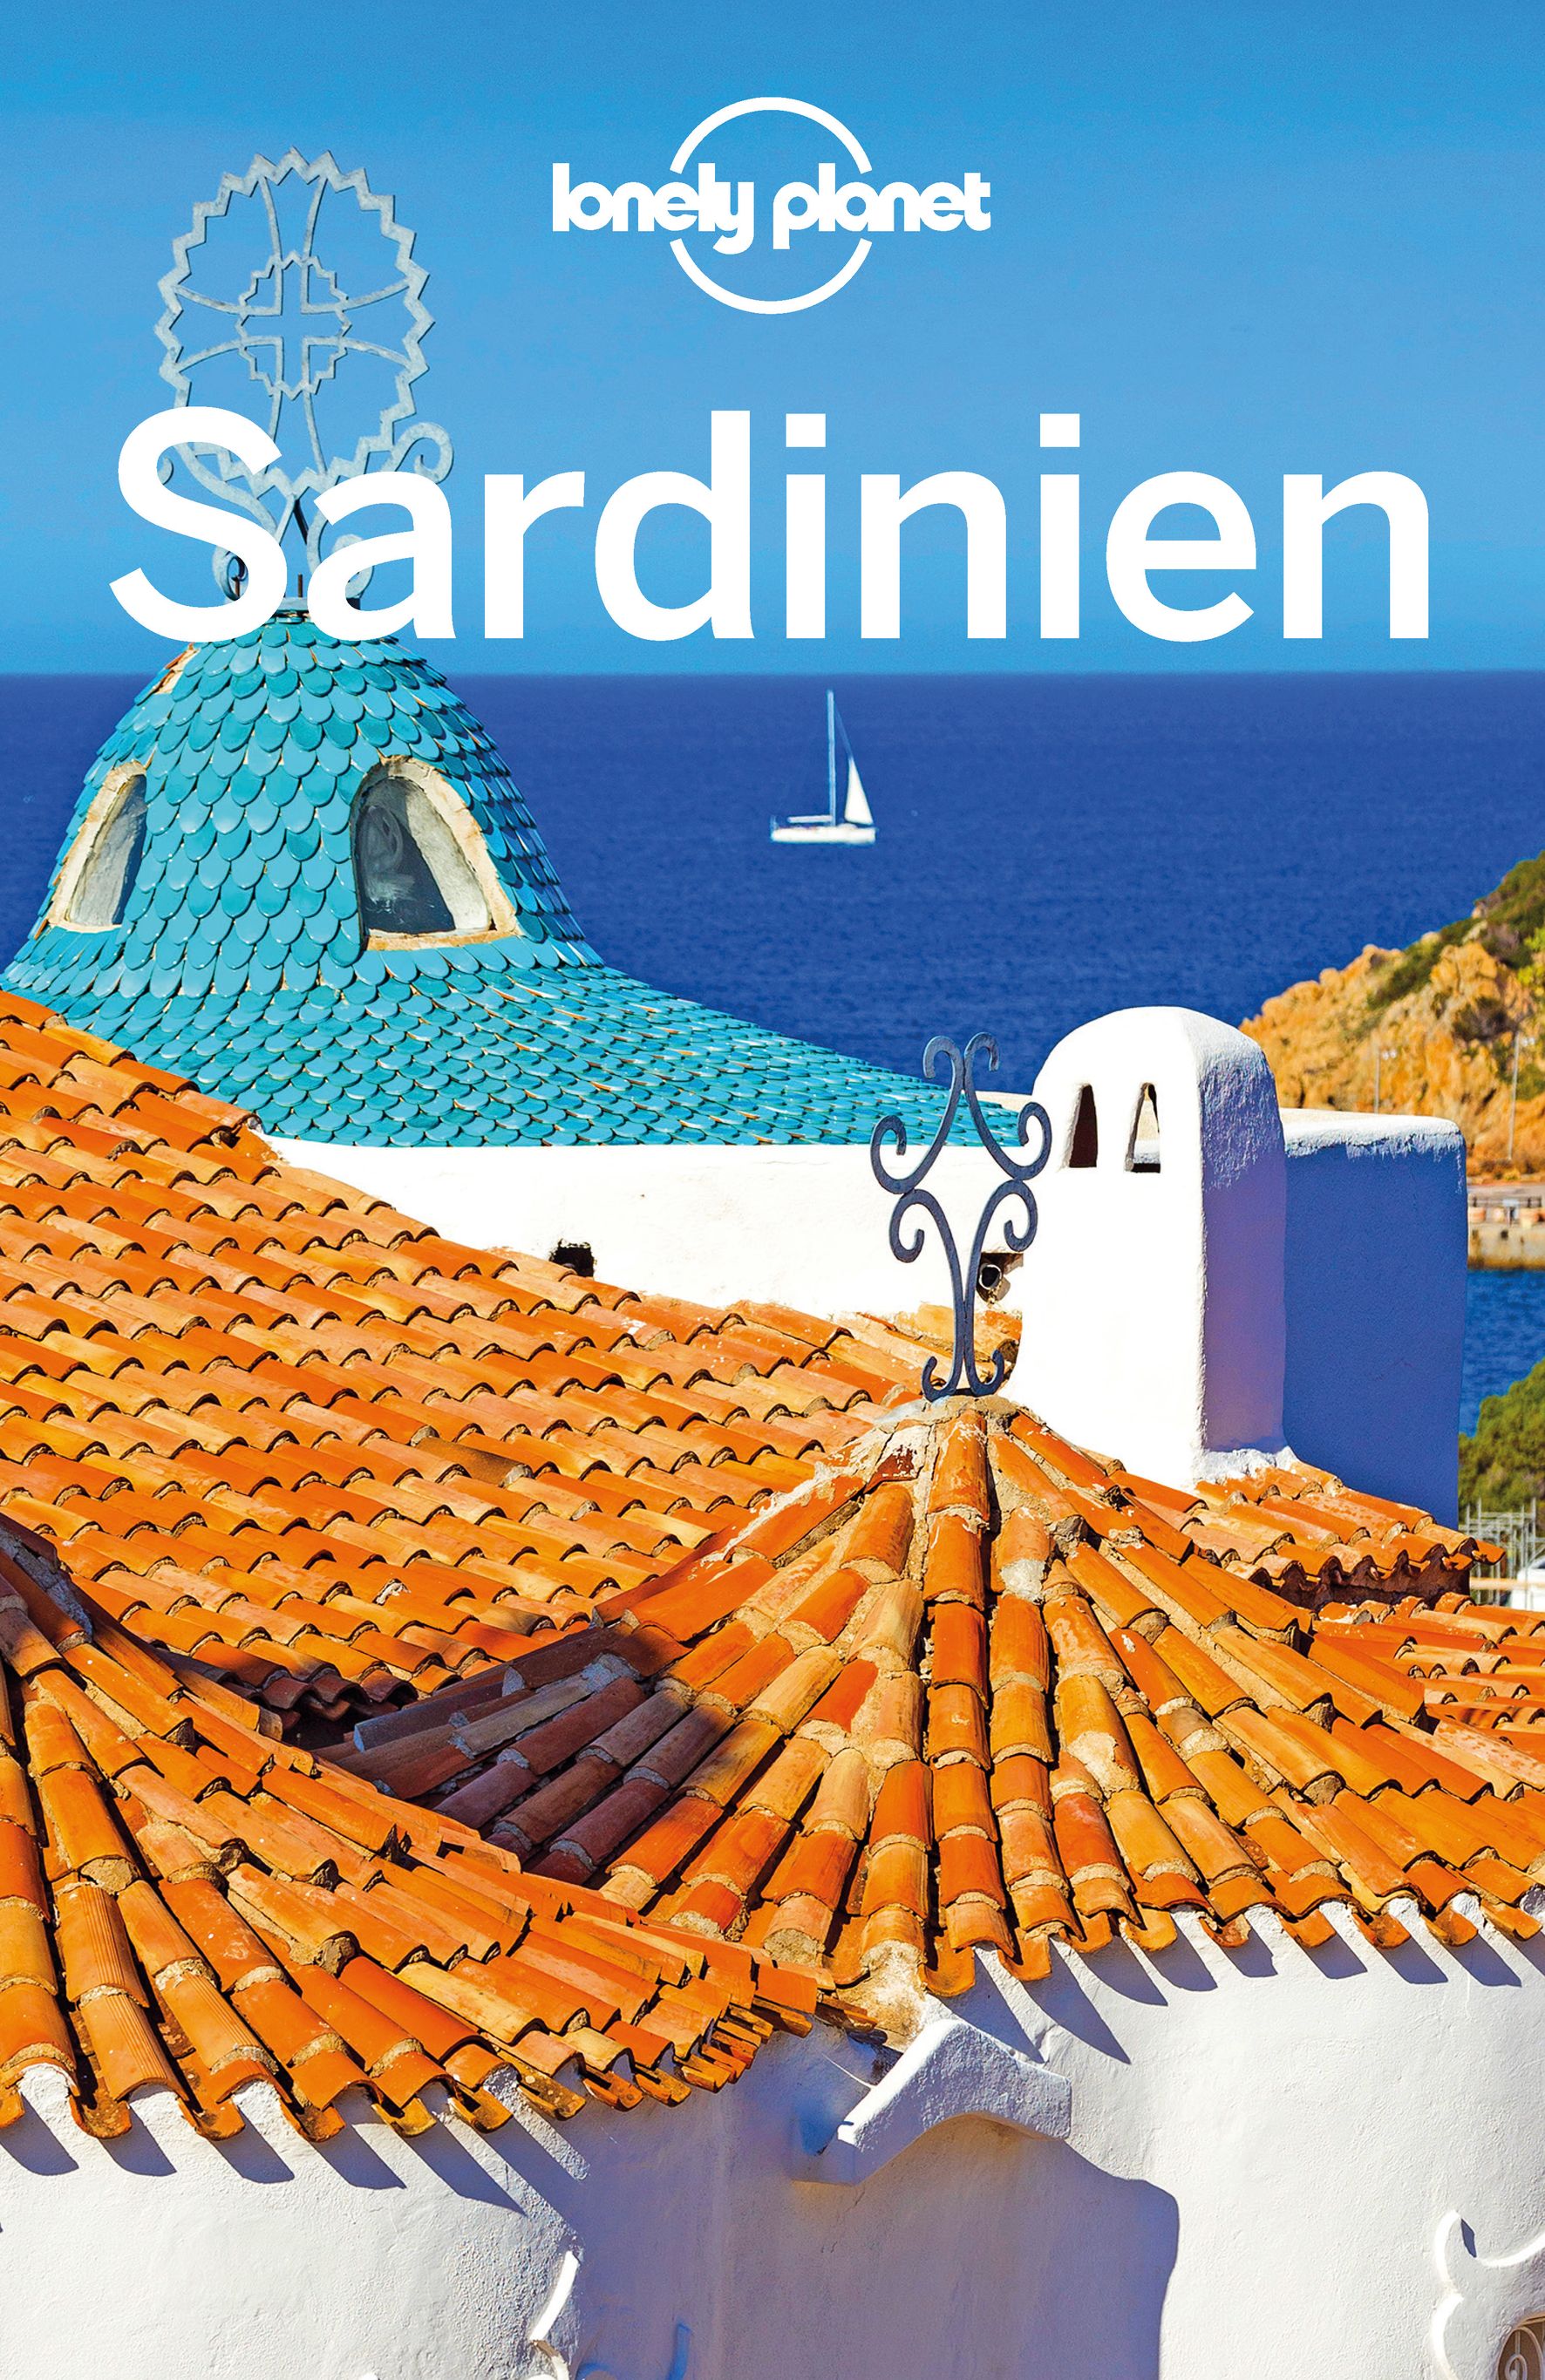 Lonely Planet Sardinien